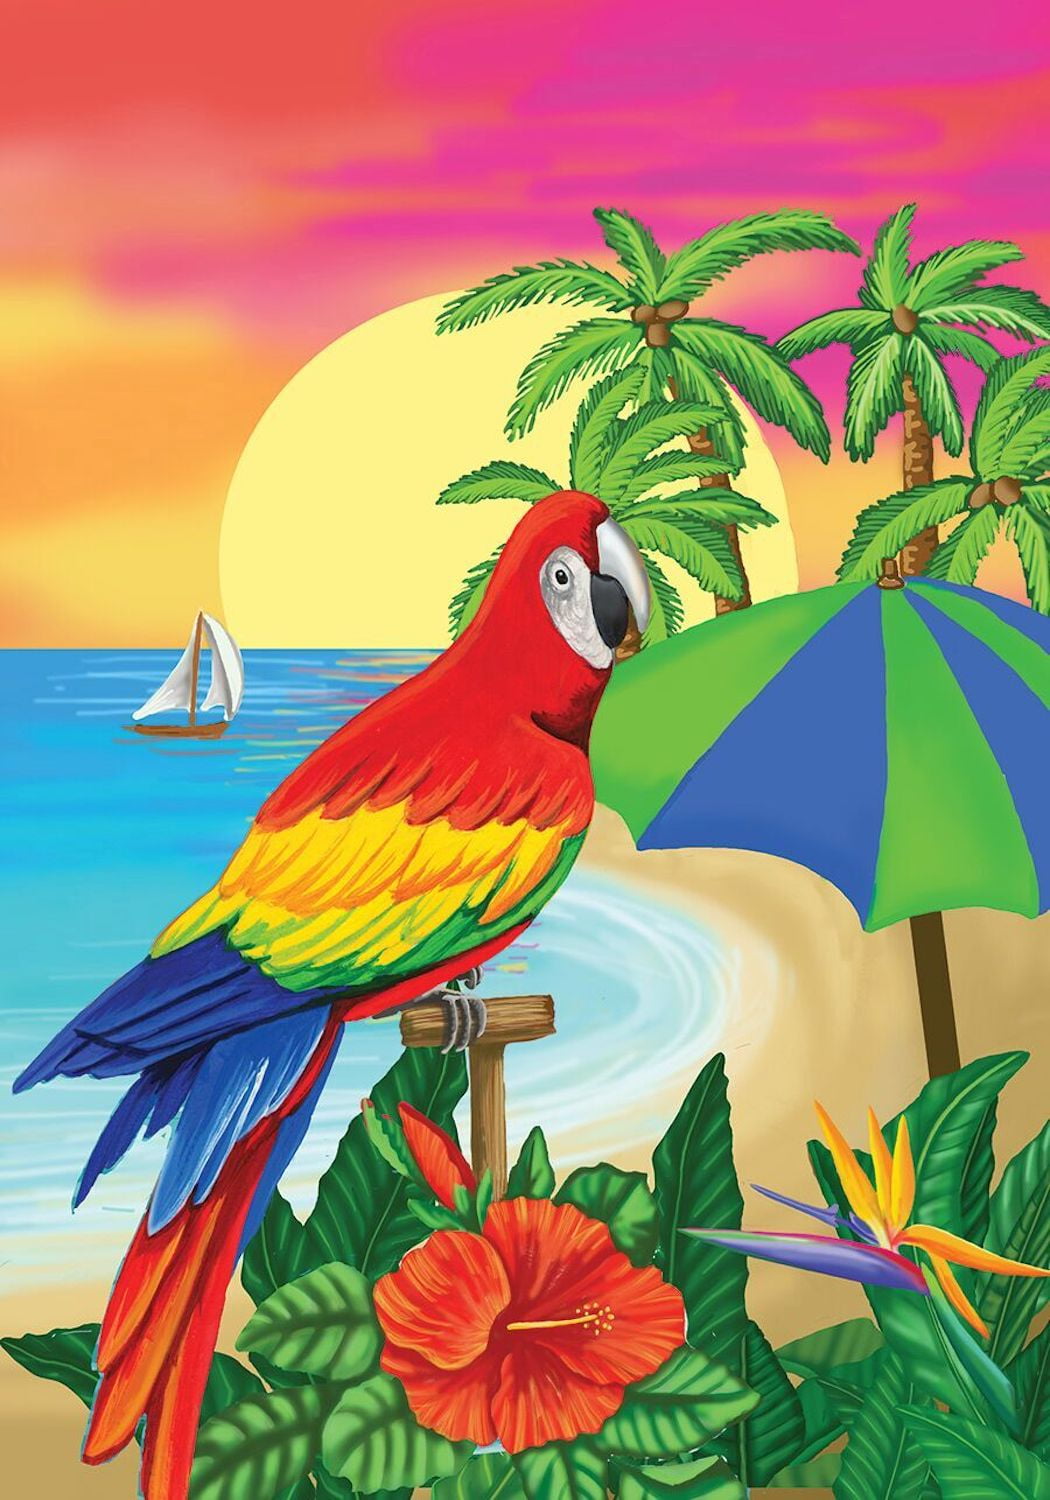 Paradise Parrot Summer Garden Flag Tropical Island Sailboat Palm Trees 12.5"x18" 